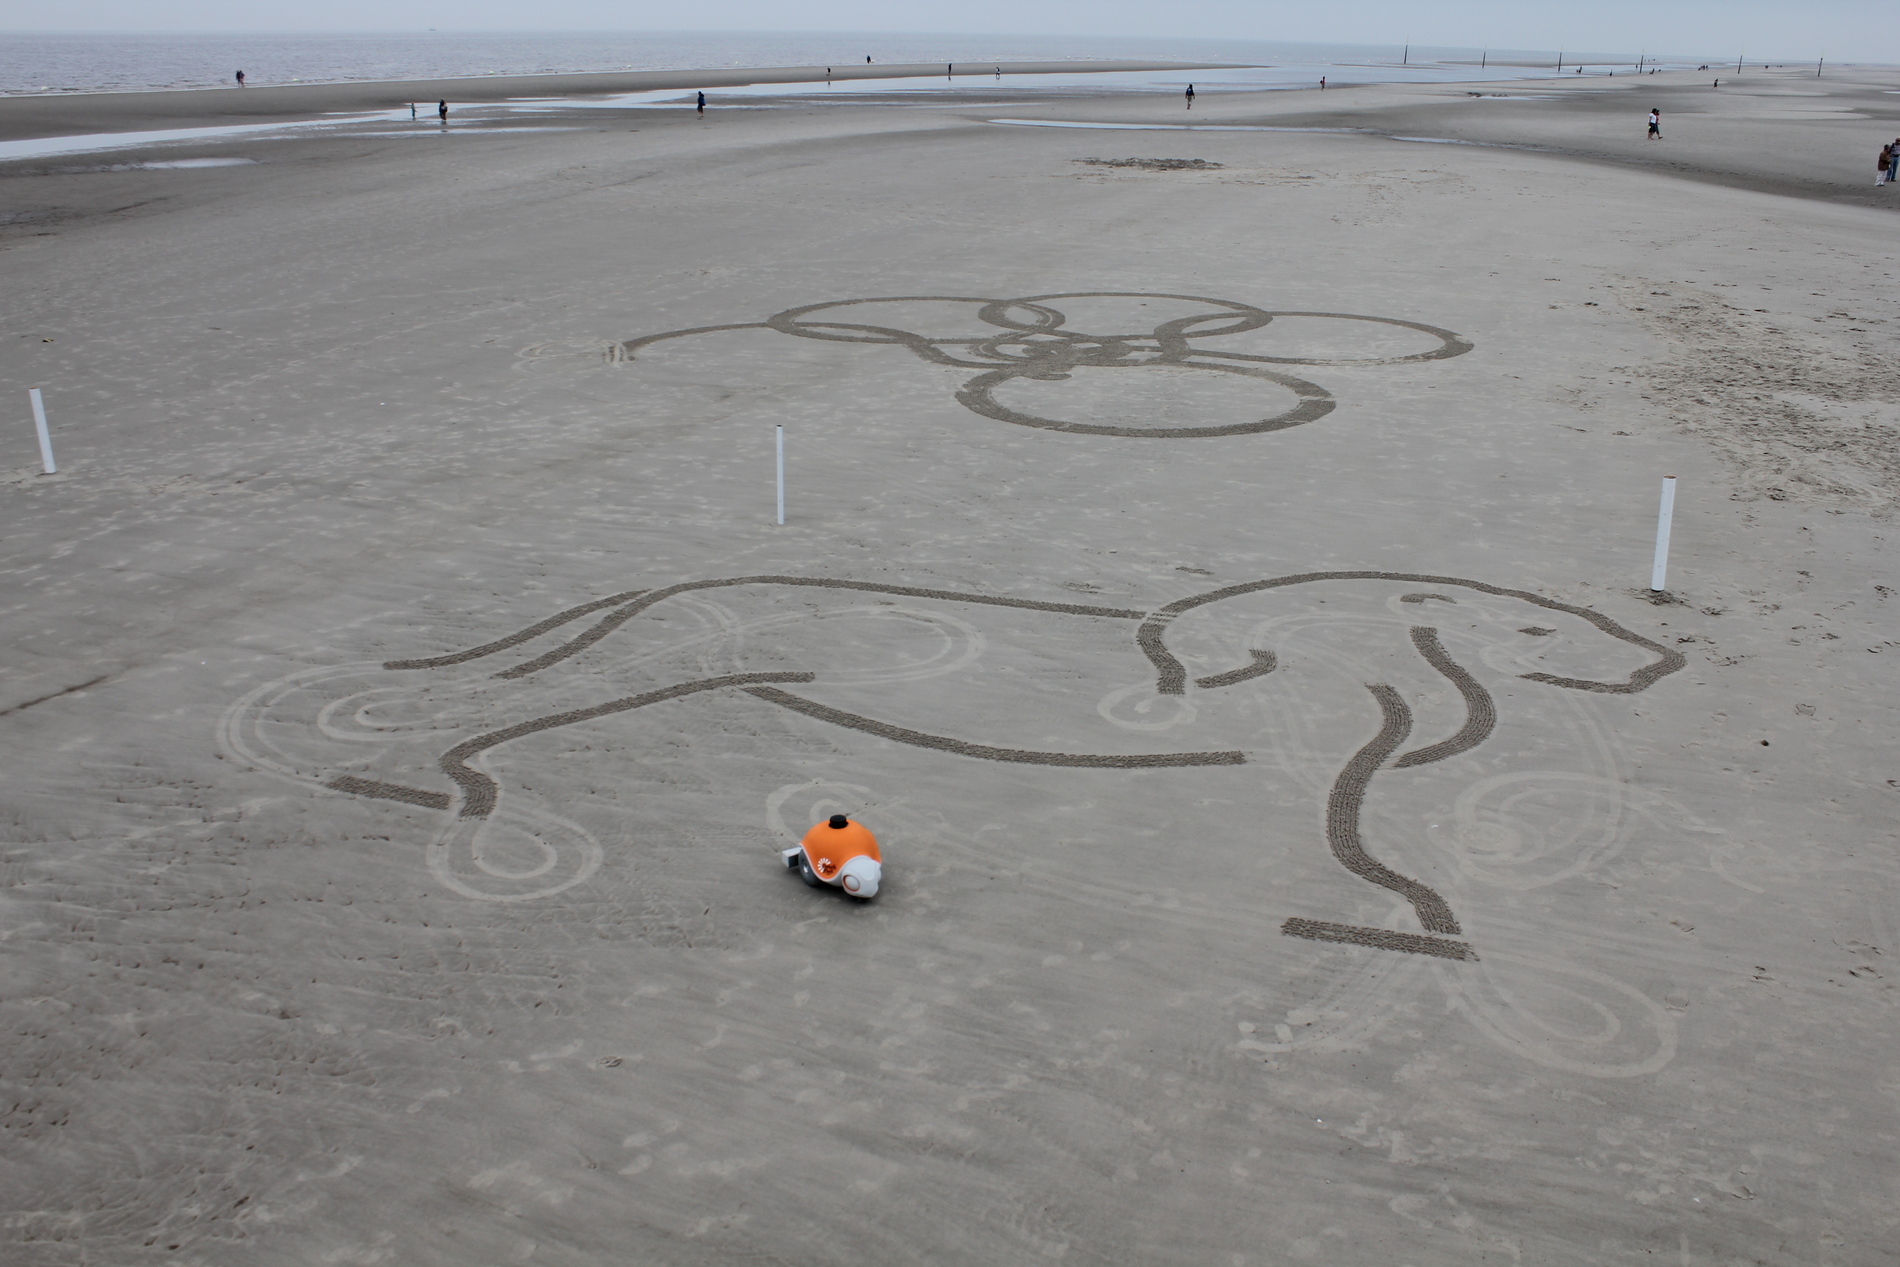 Disney’s Roomba-Like Robot, Beachbot, Can Draw Elaborate Sand Art